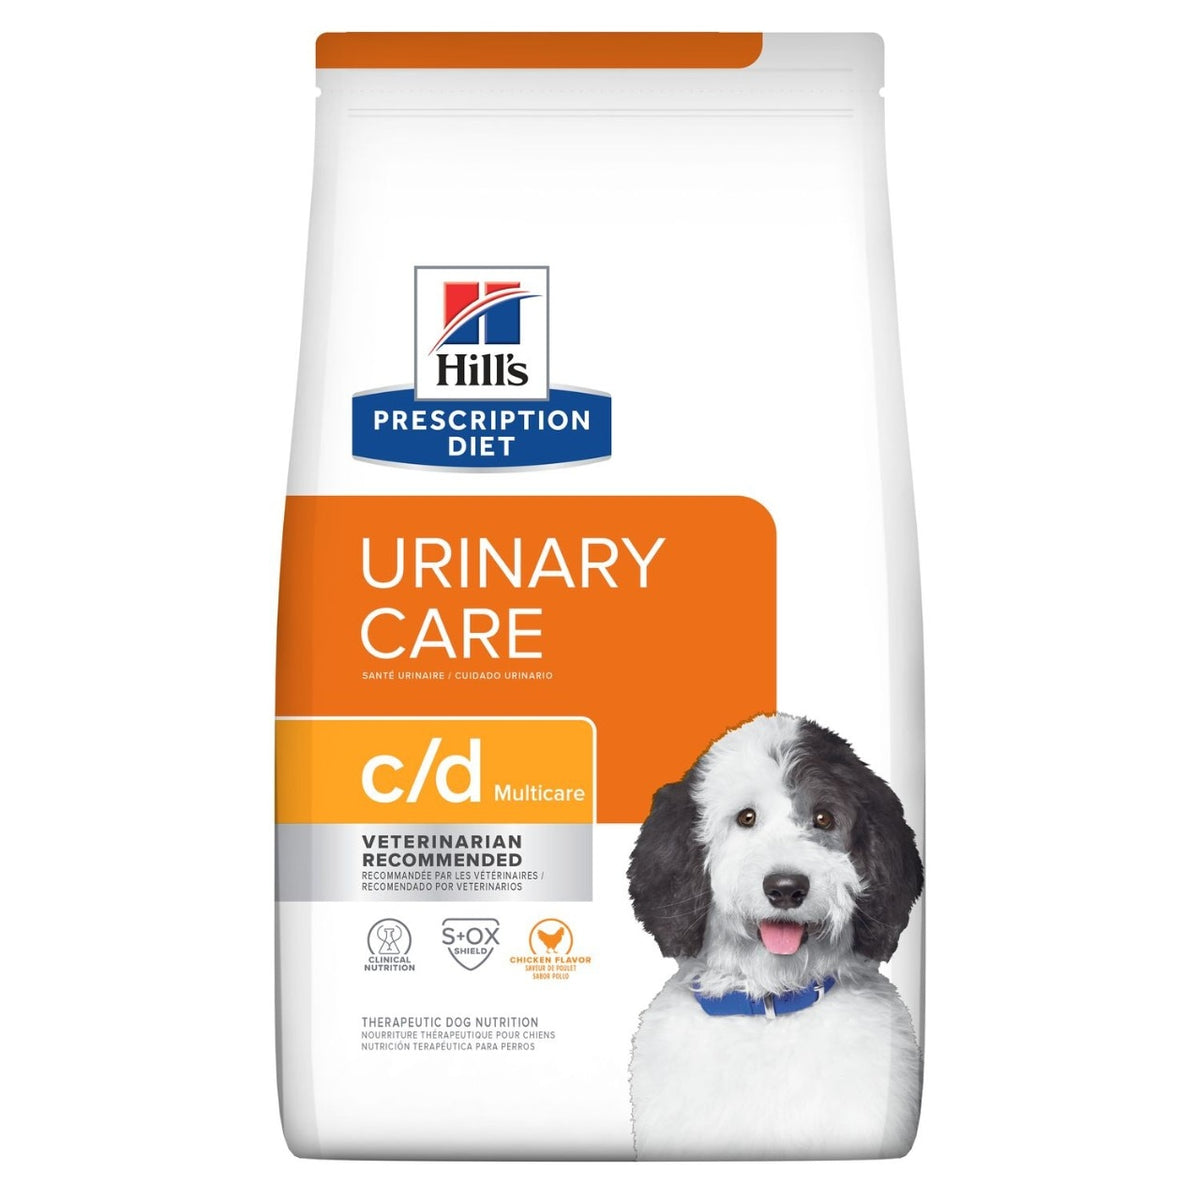 Hills Prescription Diet cd Multicare Urinary Care Dog